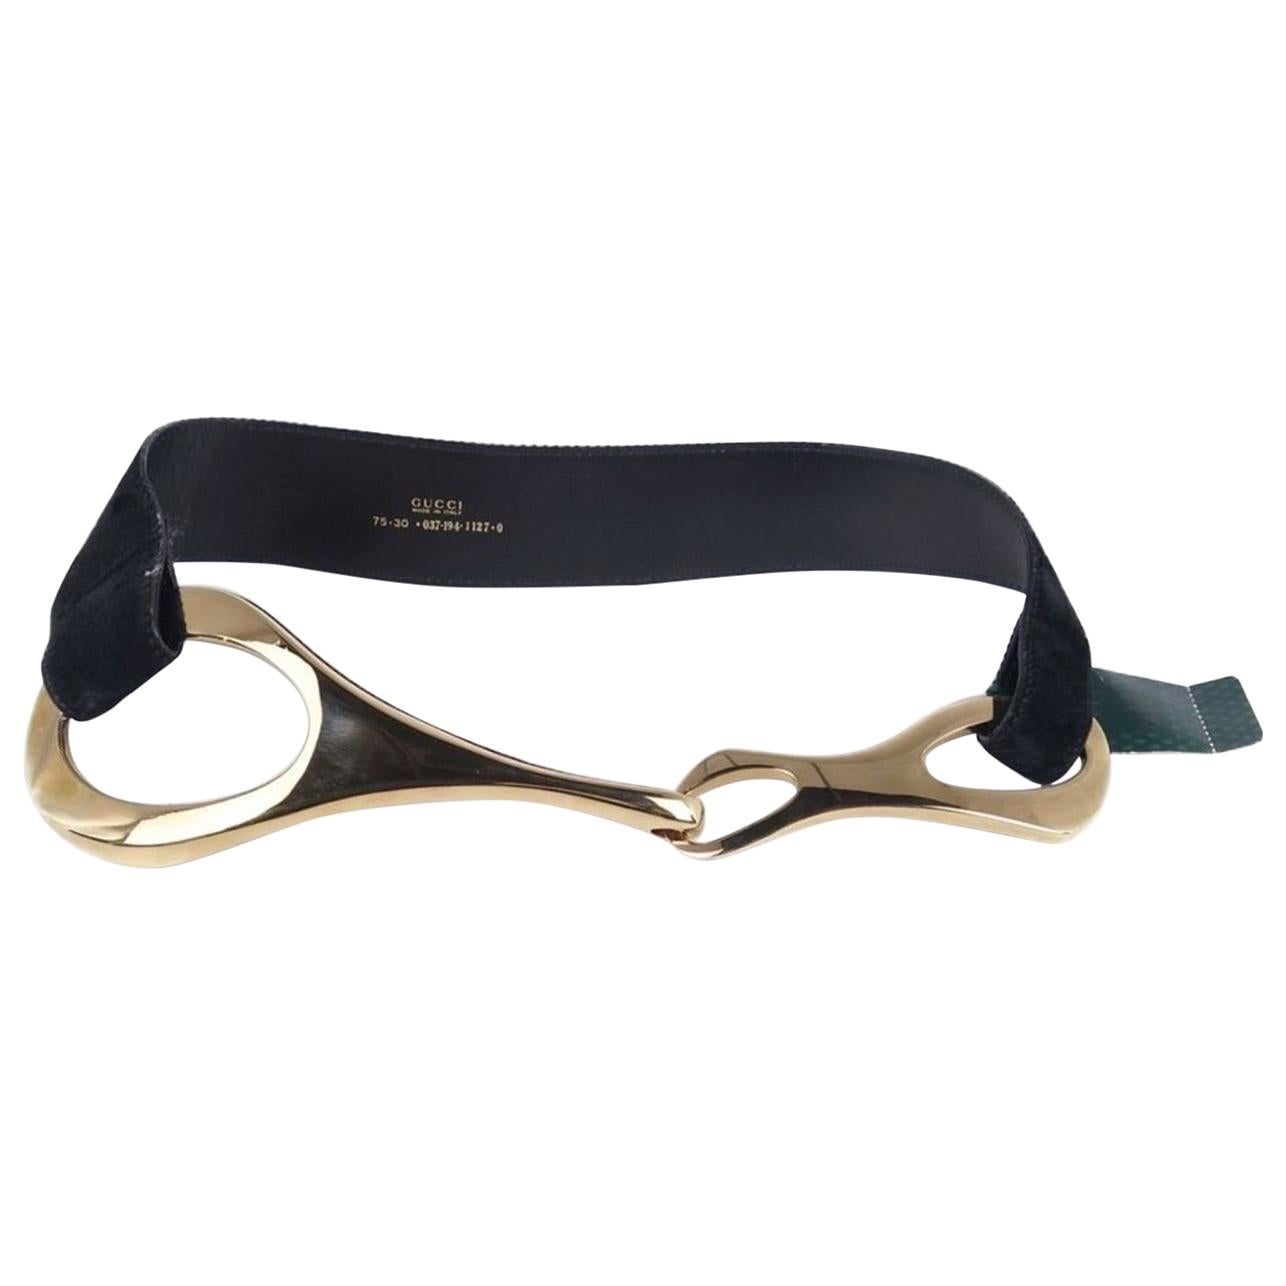 Gucci x Tom Ford NEW Black Leather Gold Large Horsebit Wide Waist Belt